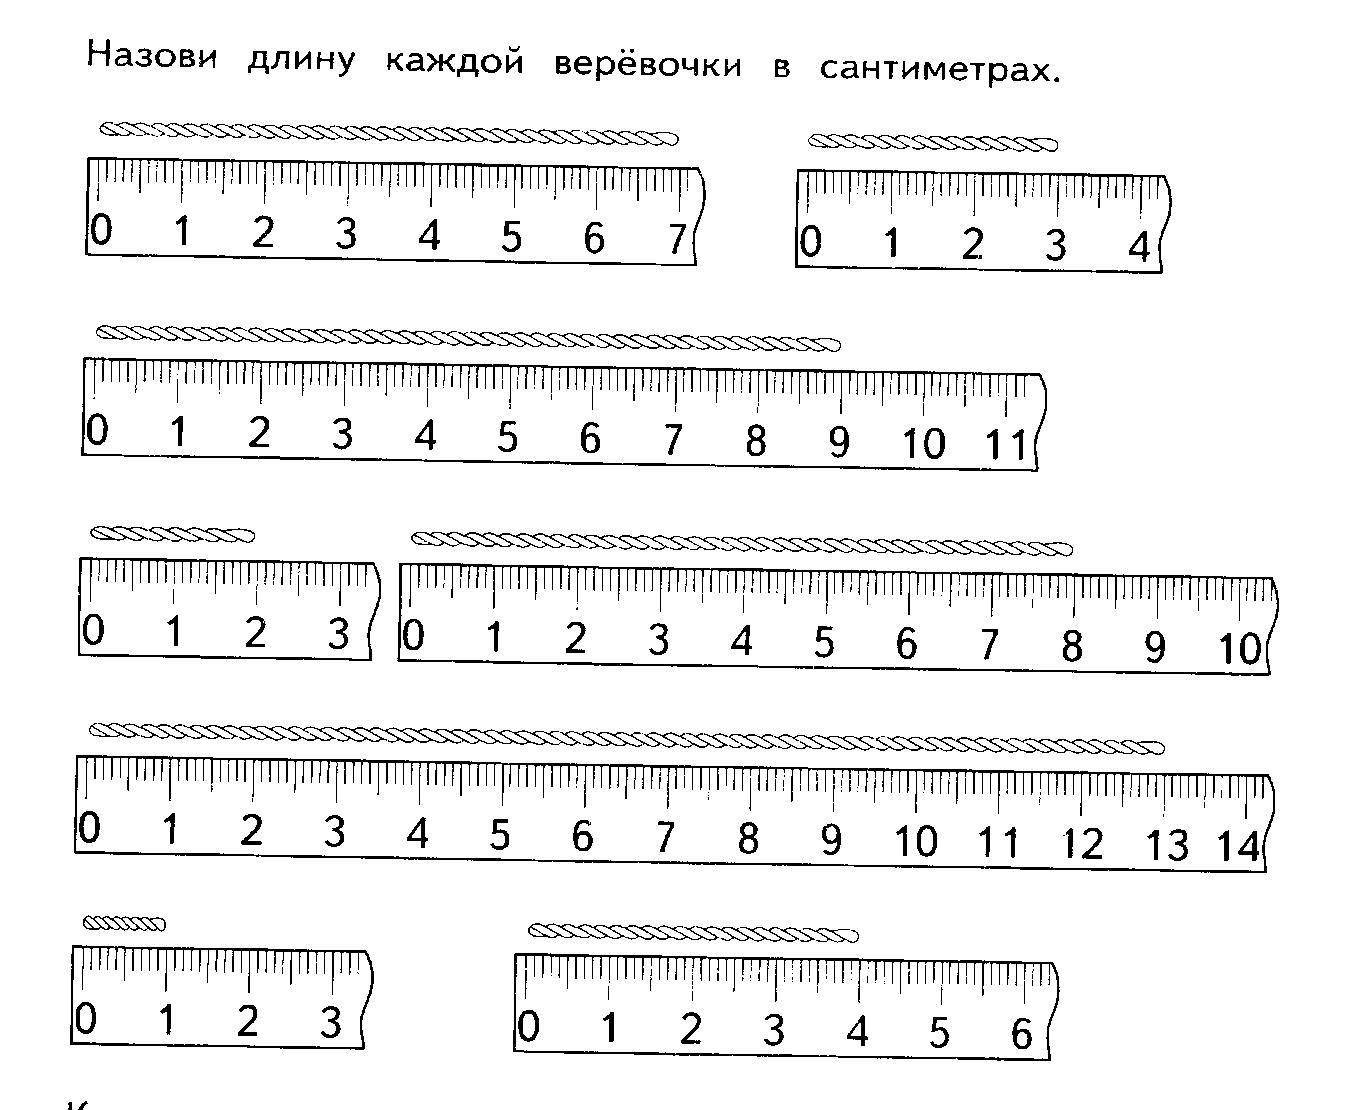 Конспект урока с презентацией урока математики в 1 классе «Мера длины. Сантиметр» по программе Л.В. Занкова